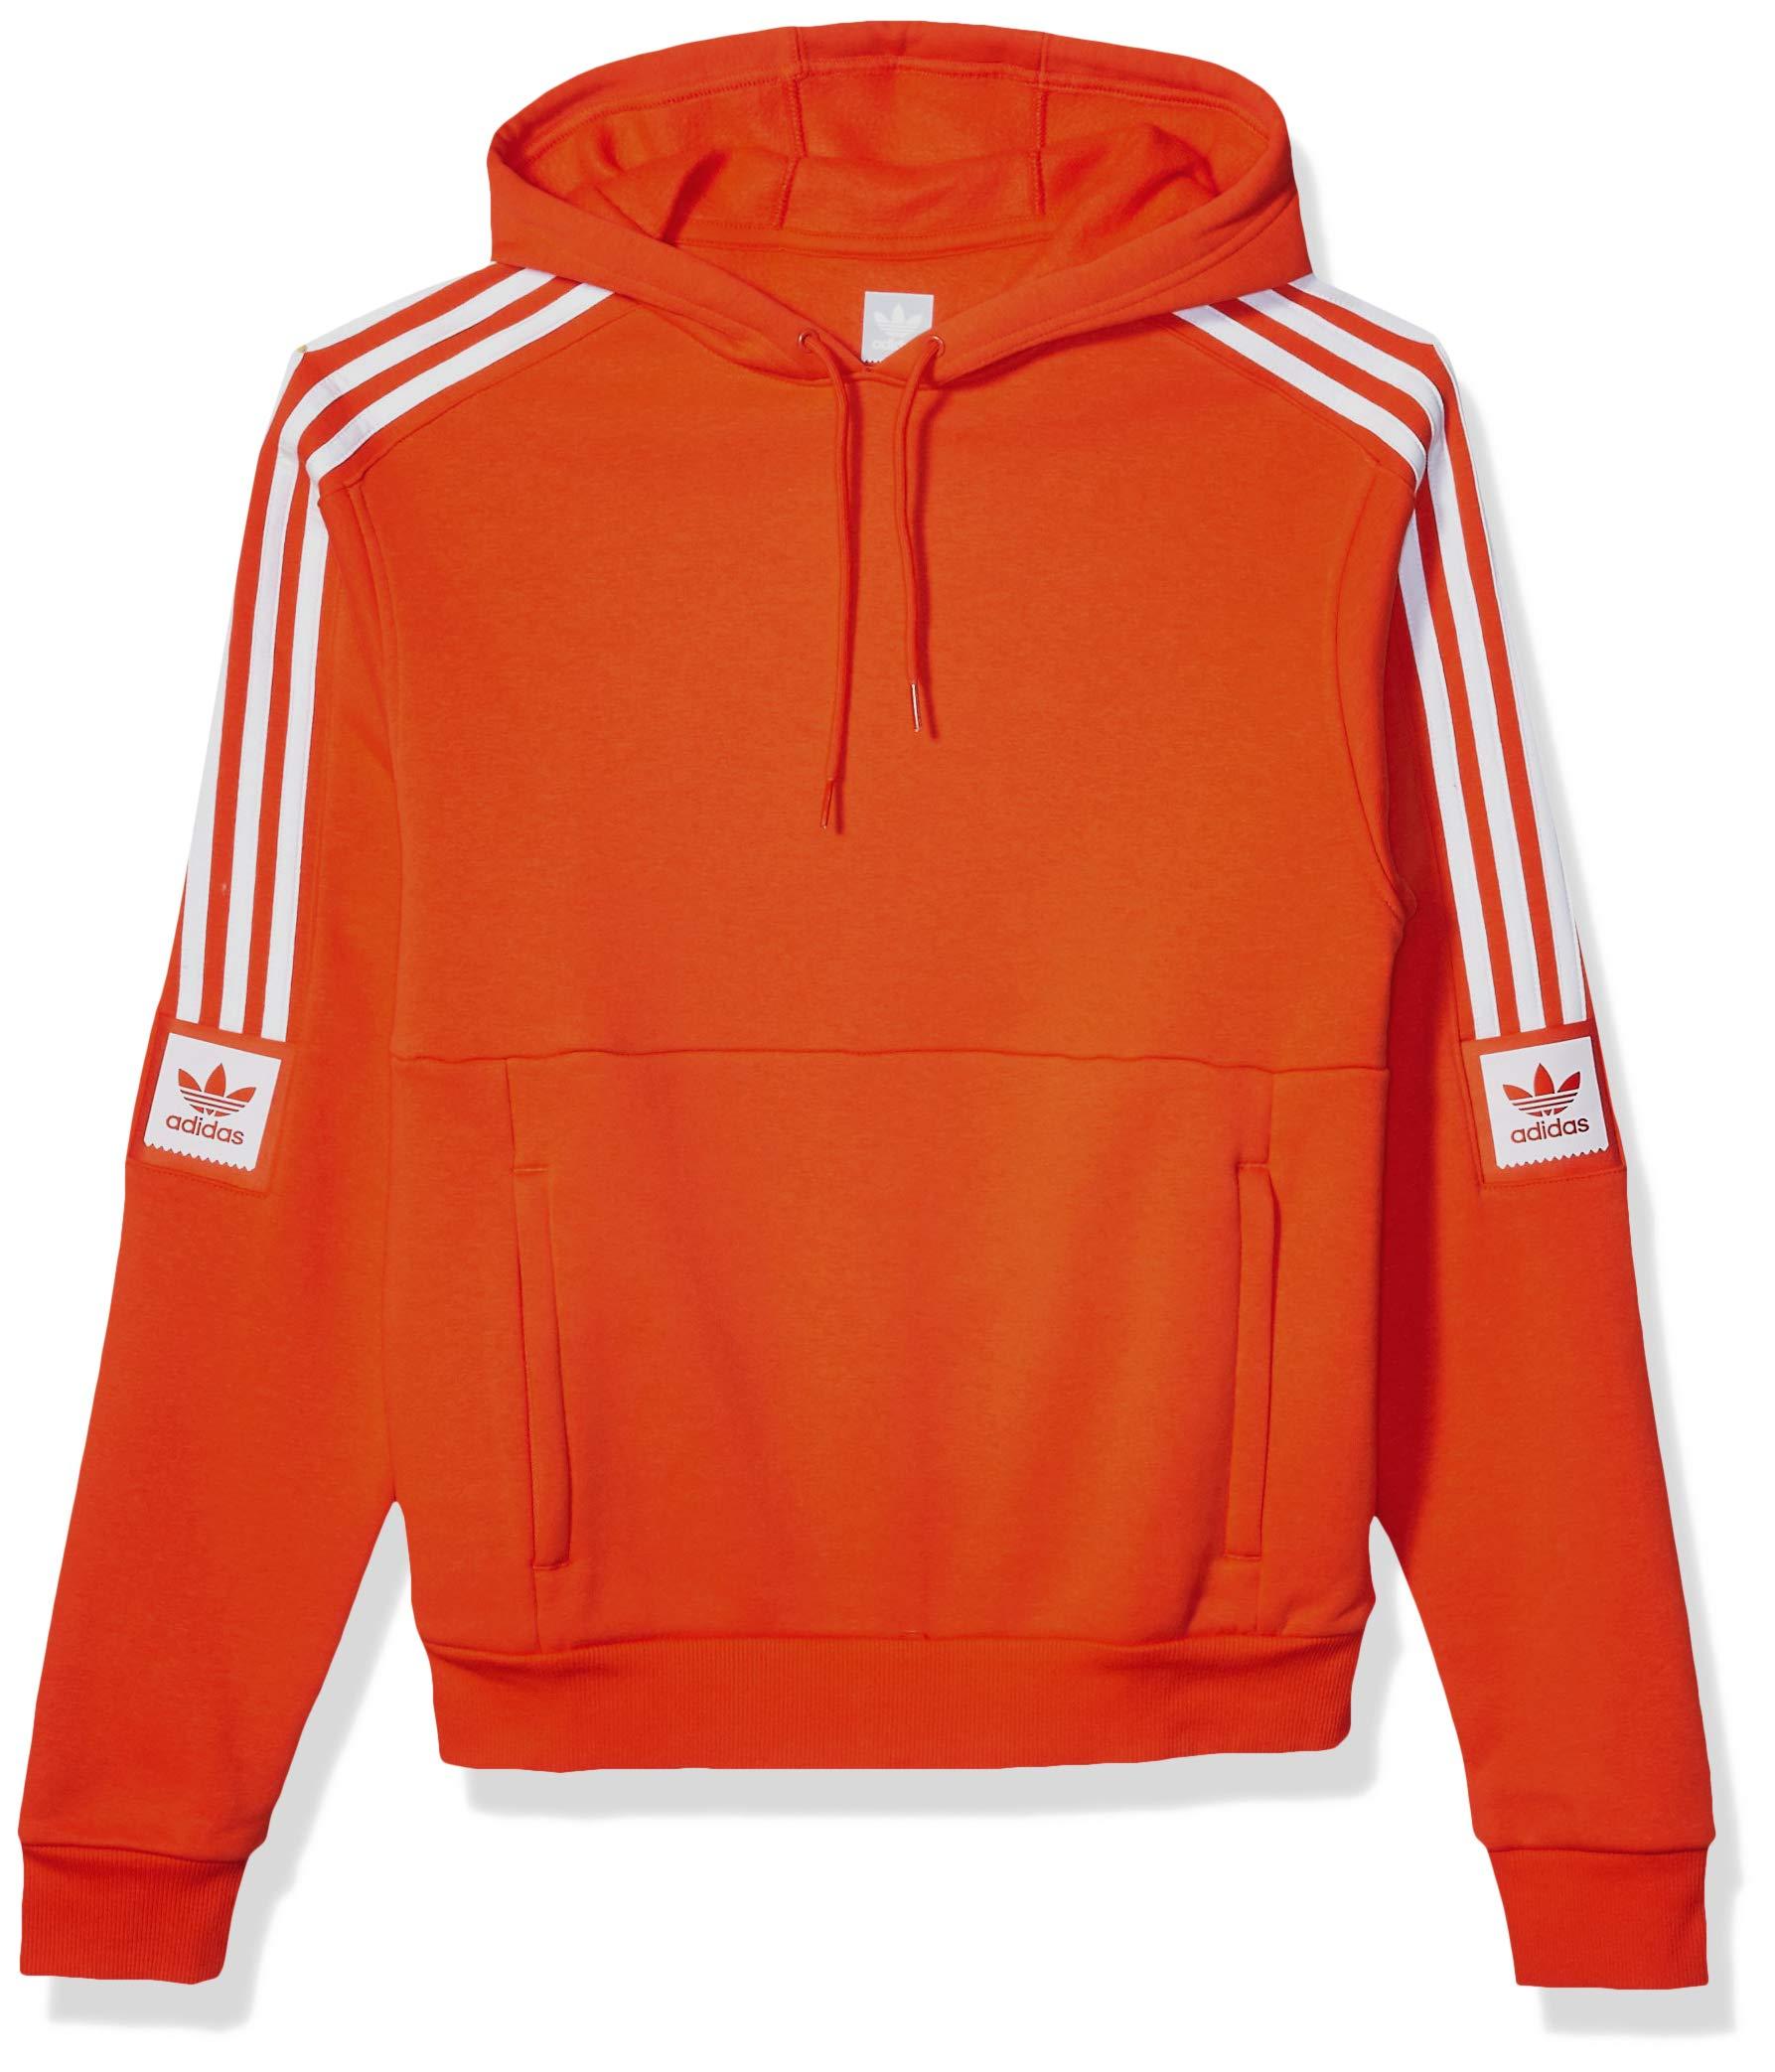 adidas Originals Skate Modular Fleece Sweatshirt in Orange for Men - Lyst